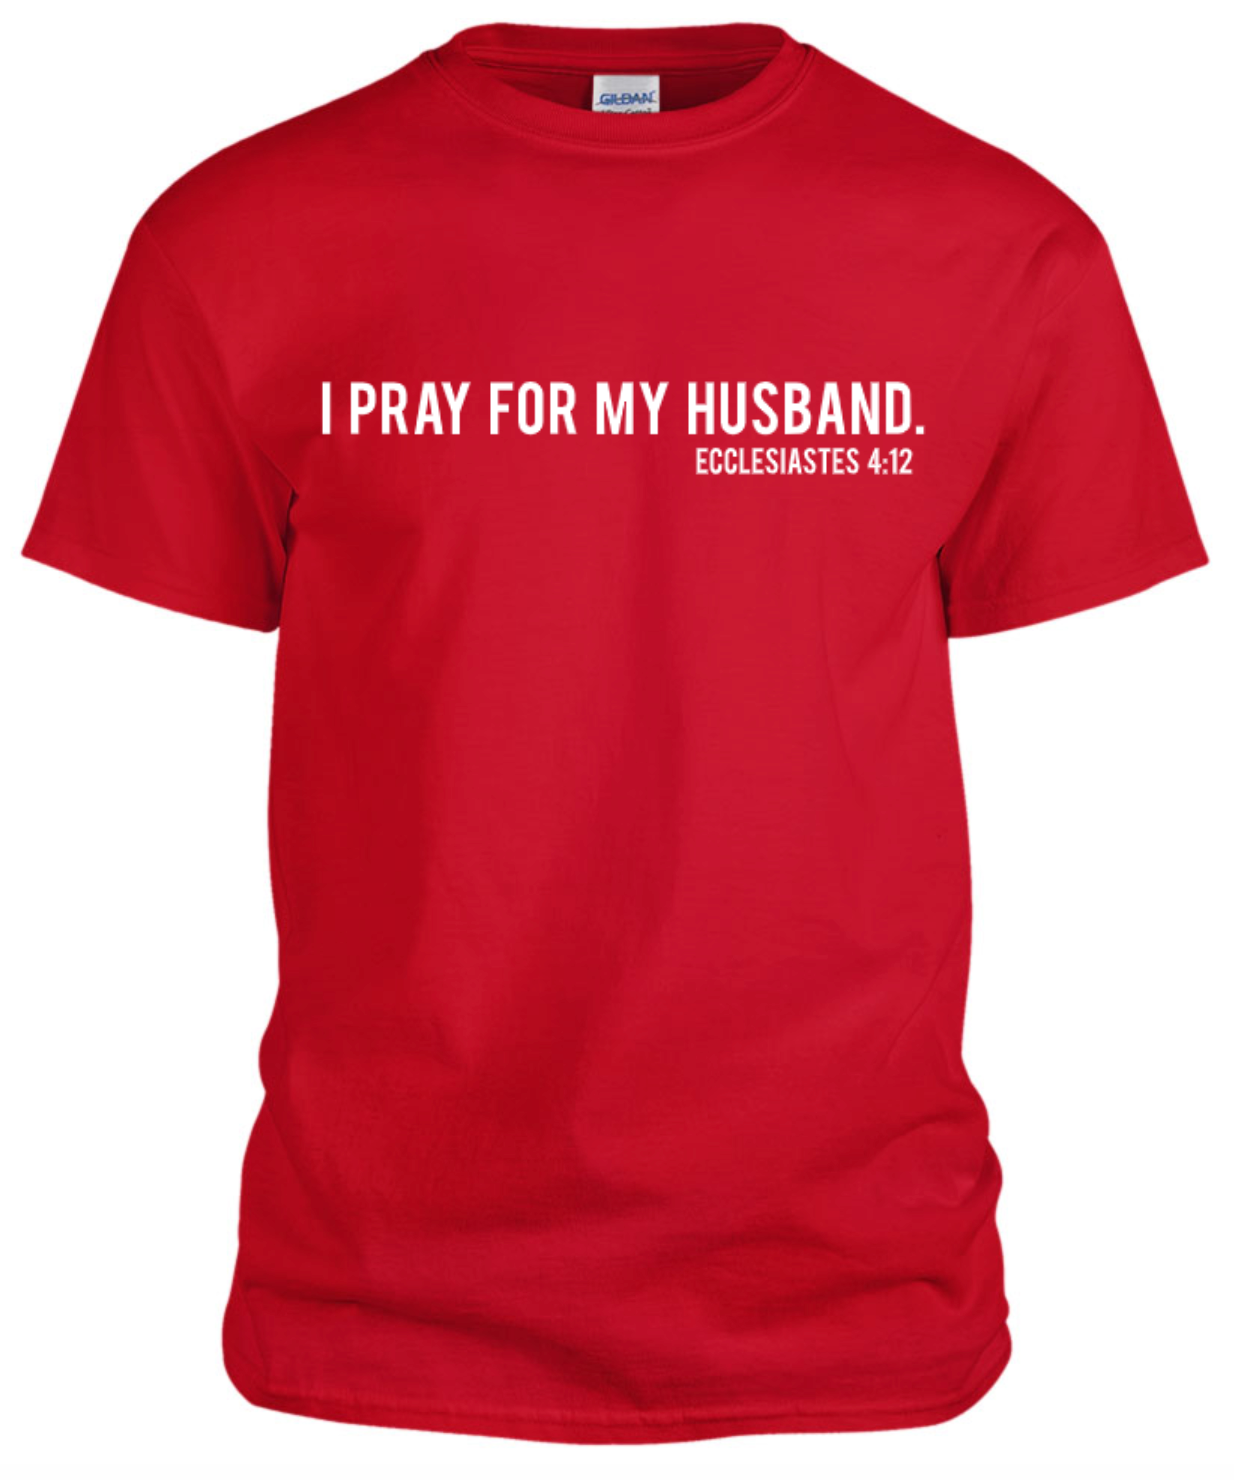 "I PRAY FOR MY HUSBAND" UNISEX TEE